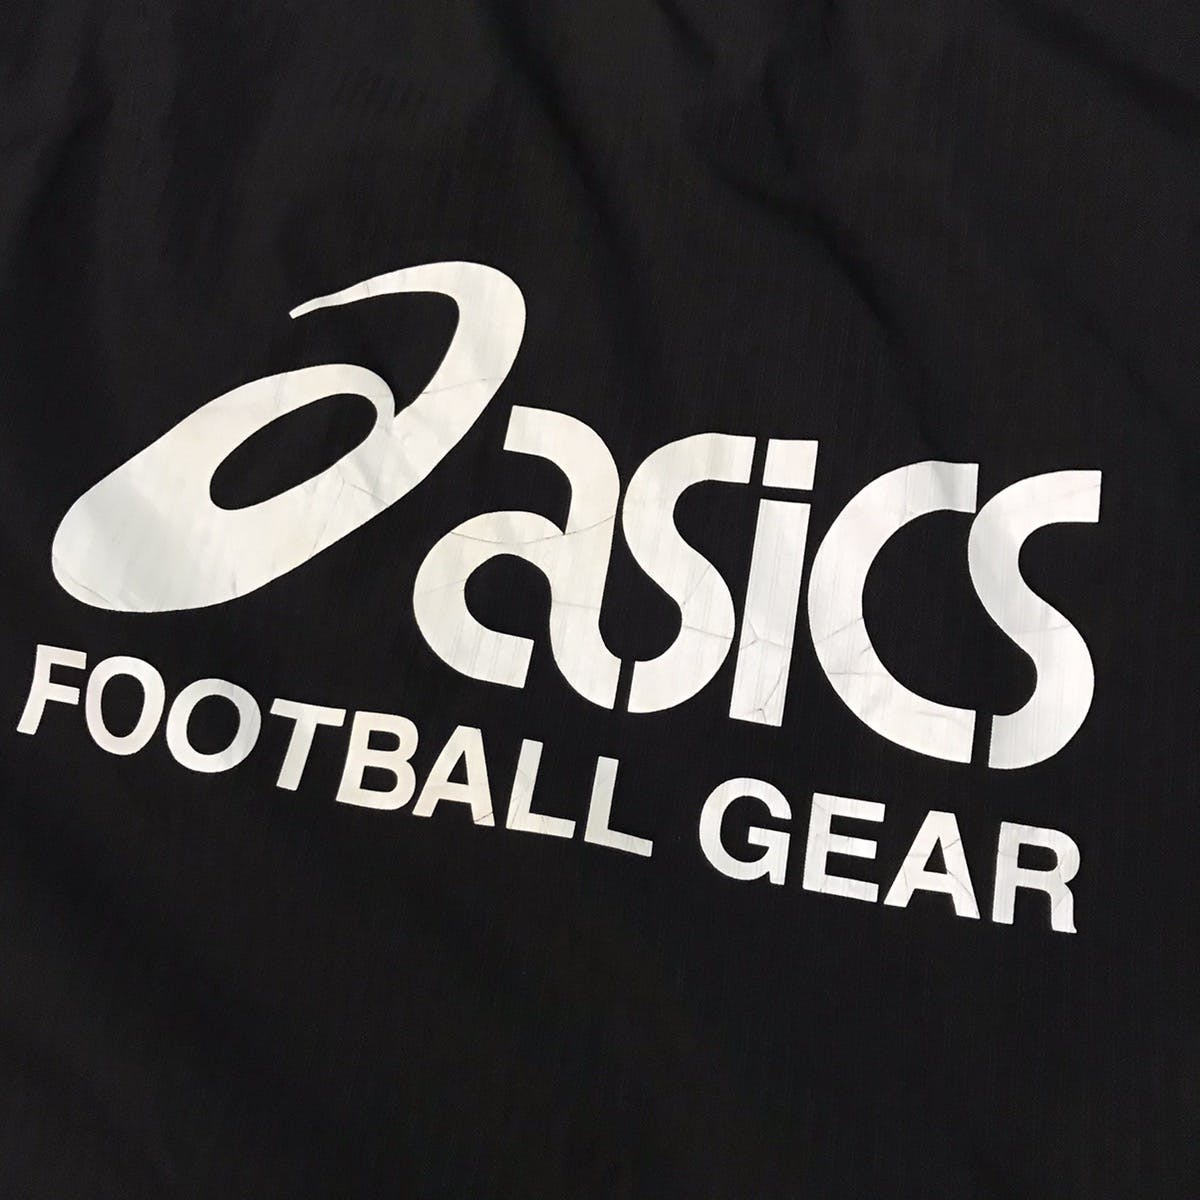 Asics football gear long sleeves - 10